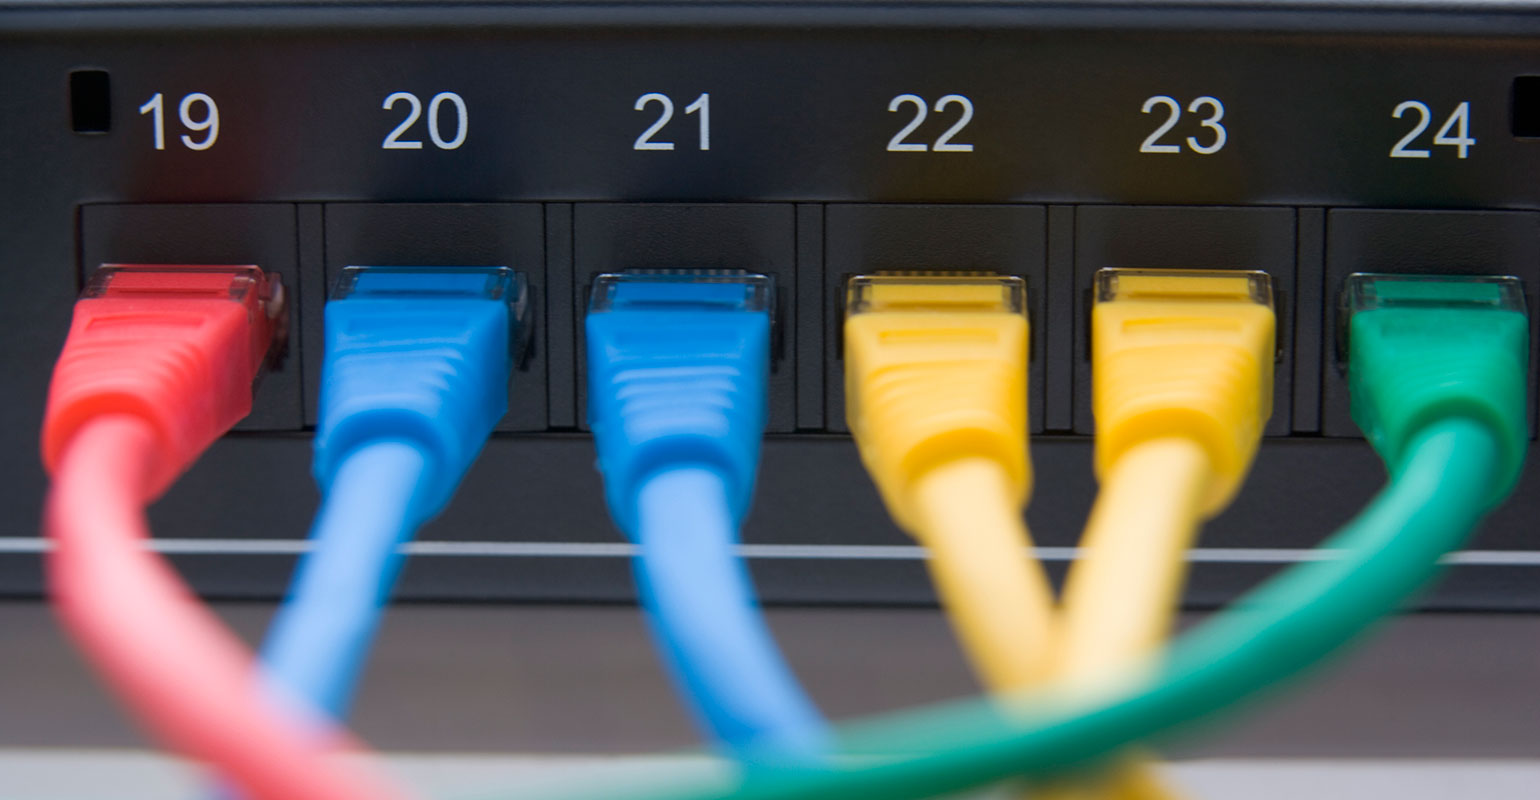 Deutsche Telekom Routers Targeted in Global Hacking Attack